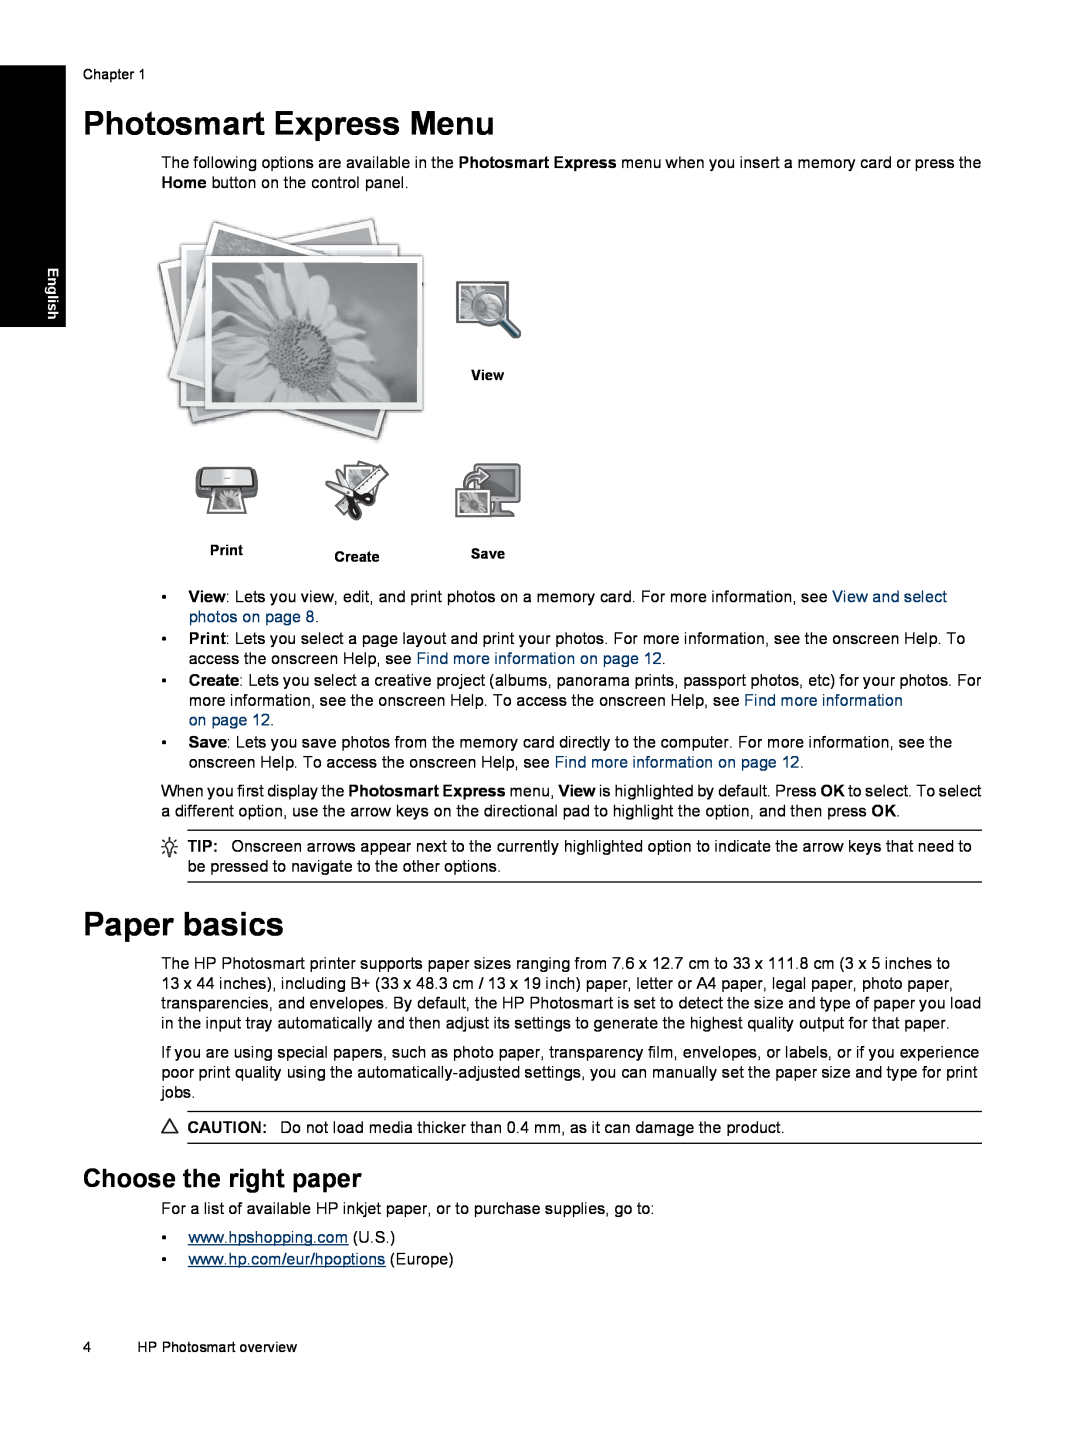 HP B8550 Photo CB981A#B1H manual Photosmart Express Menu, Paper basics, Choose the right paper, on page 